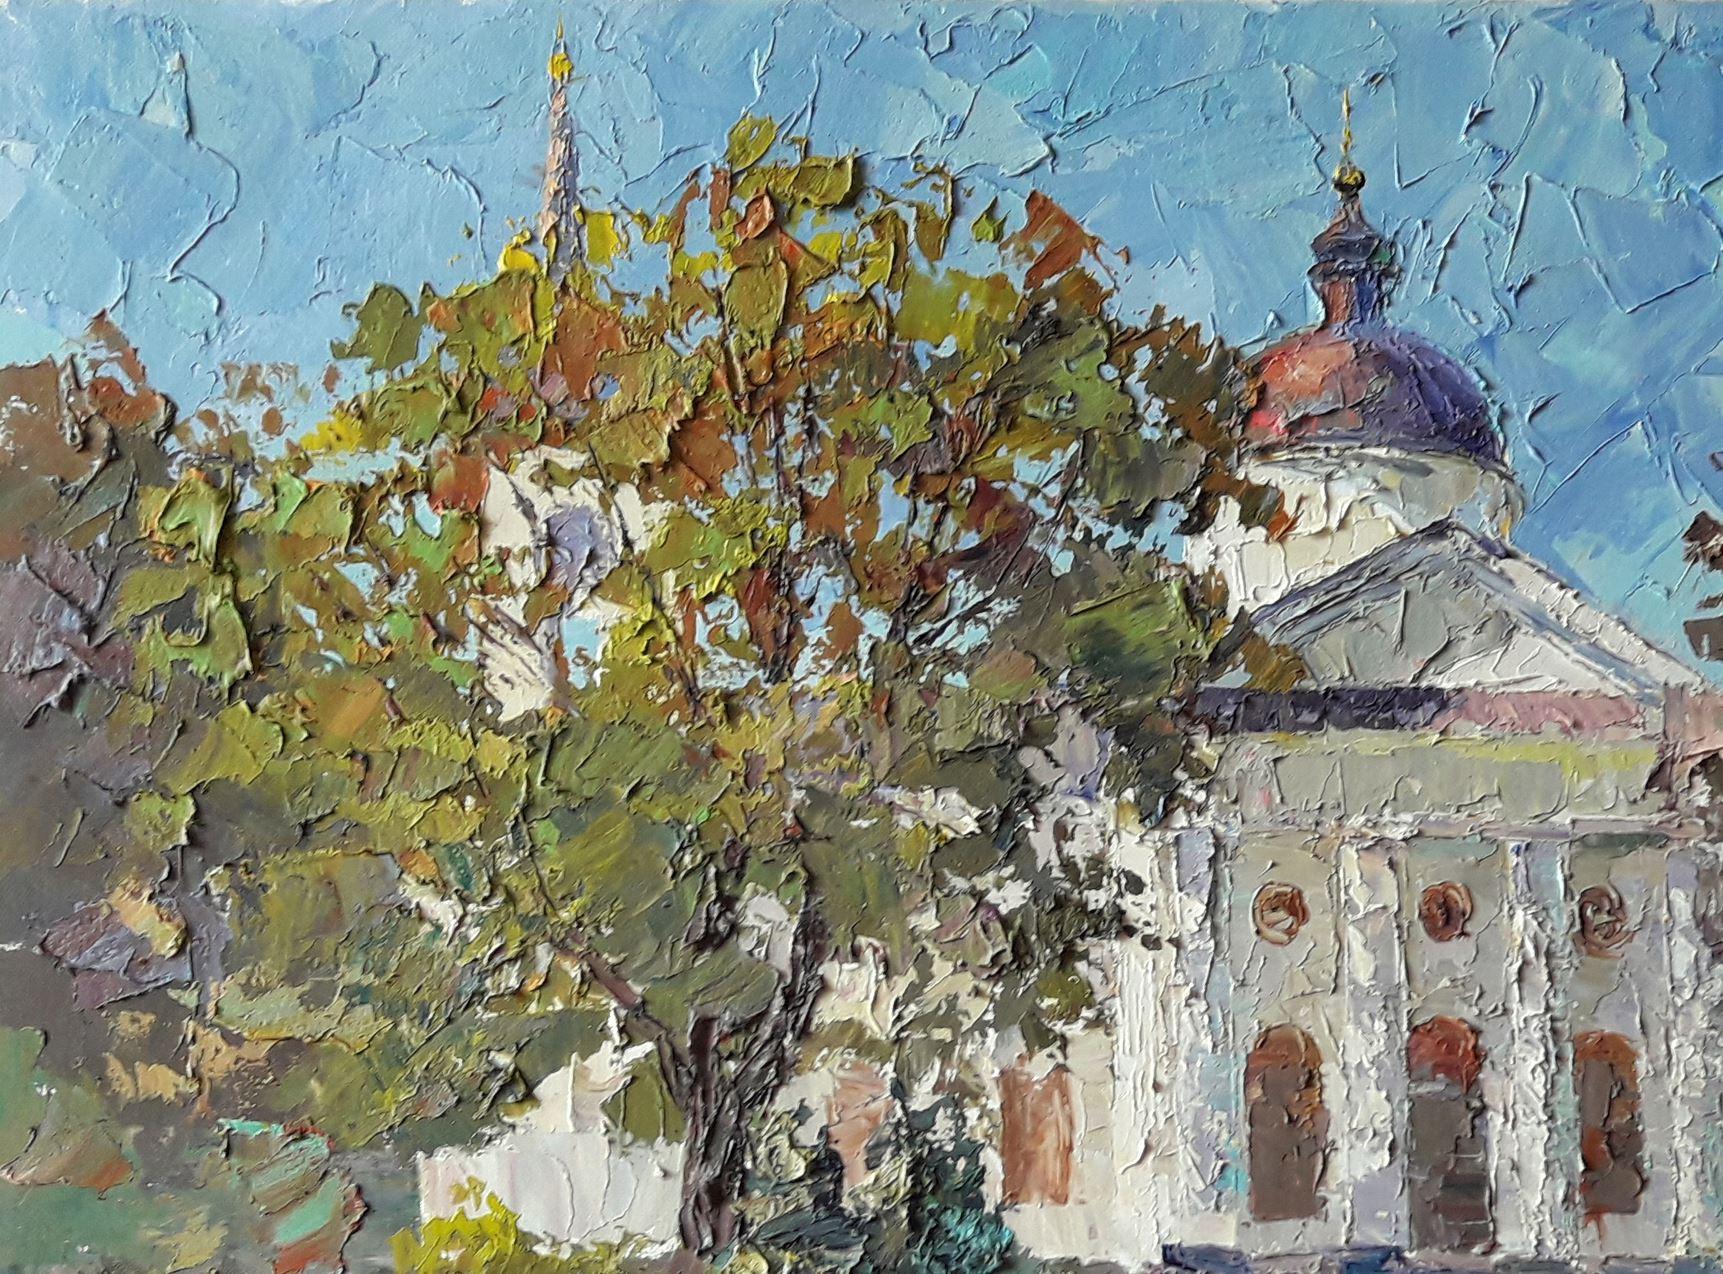 Artist: Boris Serdyuk 
Work: Original oil painting, handmade artwork, one of a kind 
Medium: Oil on Canvas
Style: Impressionism
Year: 2020
Title: Baturin Temple
Size: 21.5